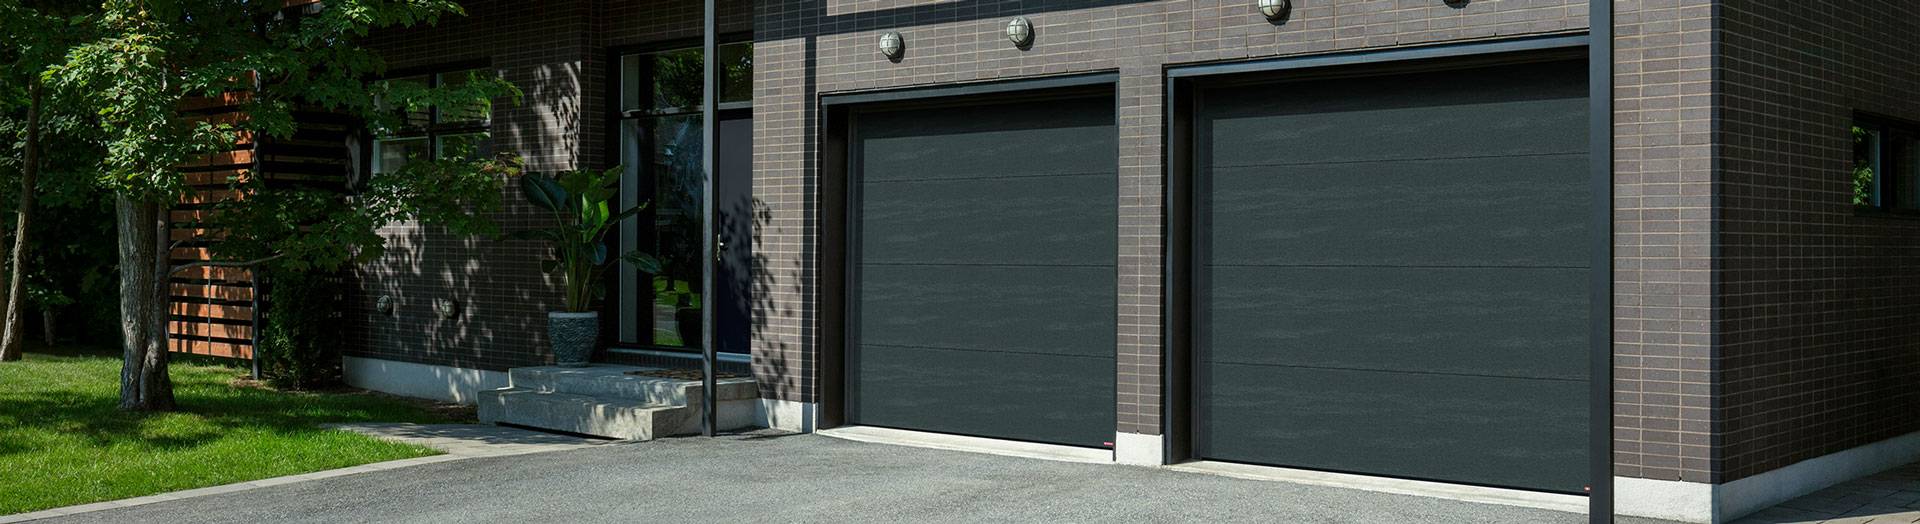 Modern exterior home design, blond wood, grey brick, 2 flush garage door in Iron Ore colors